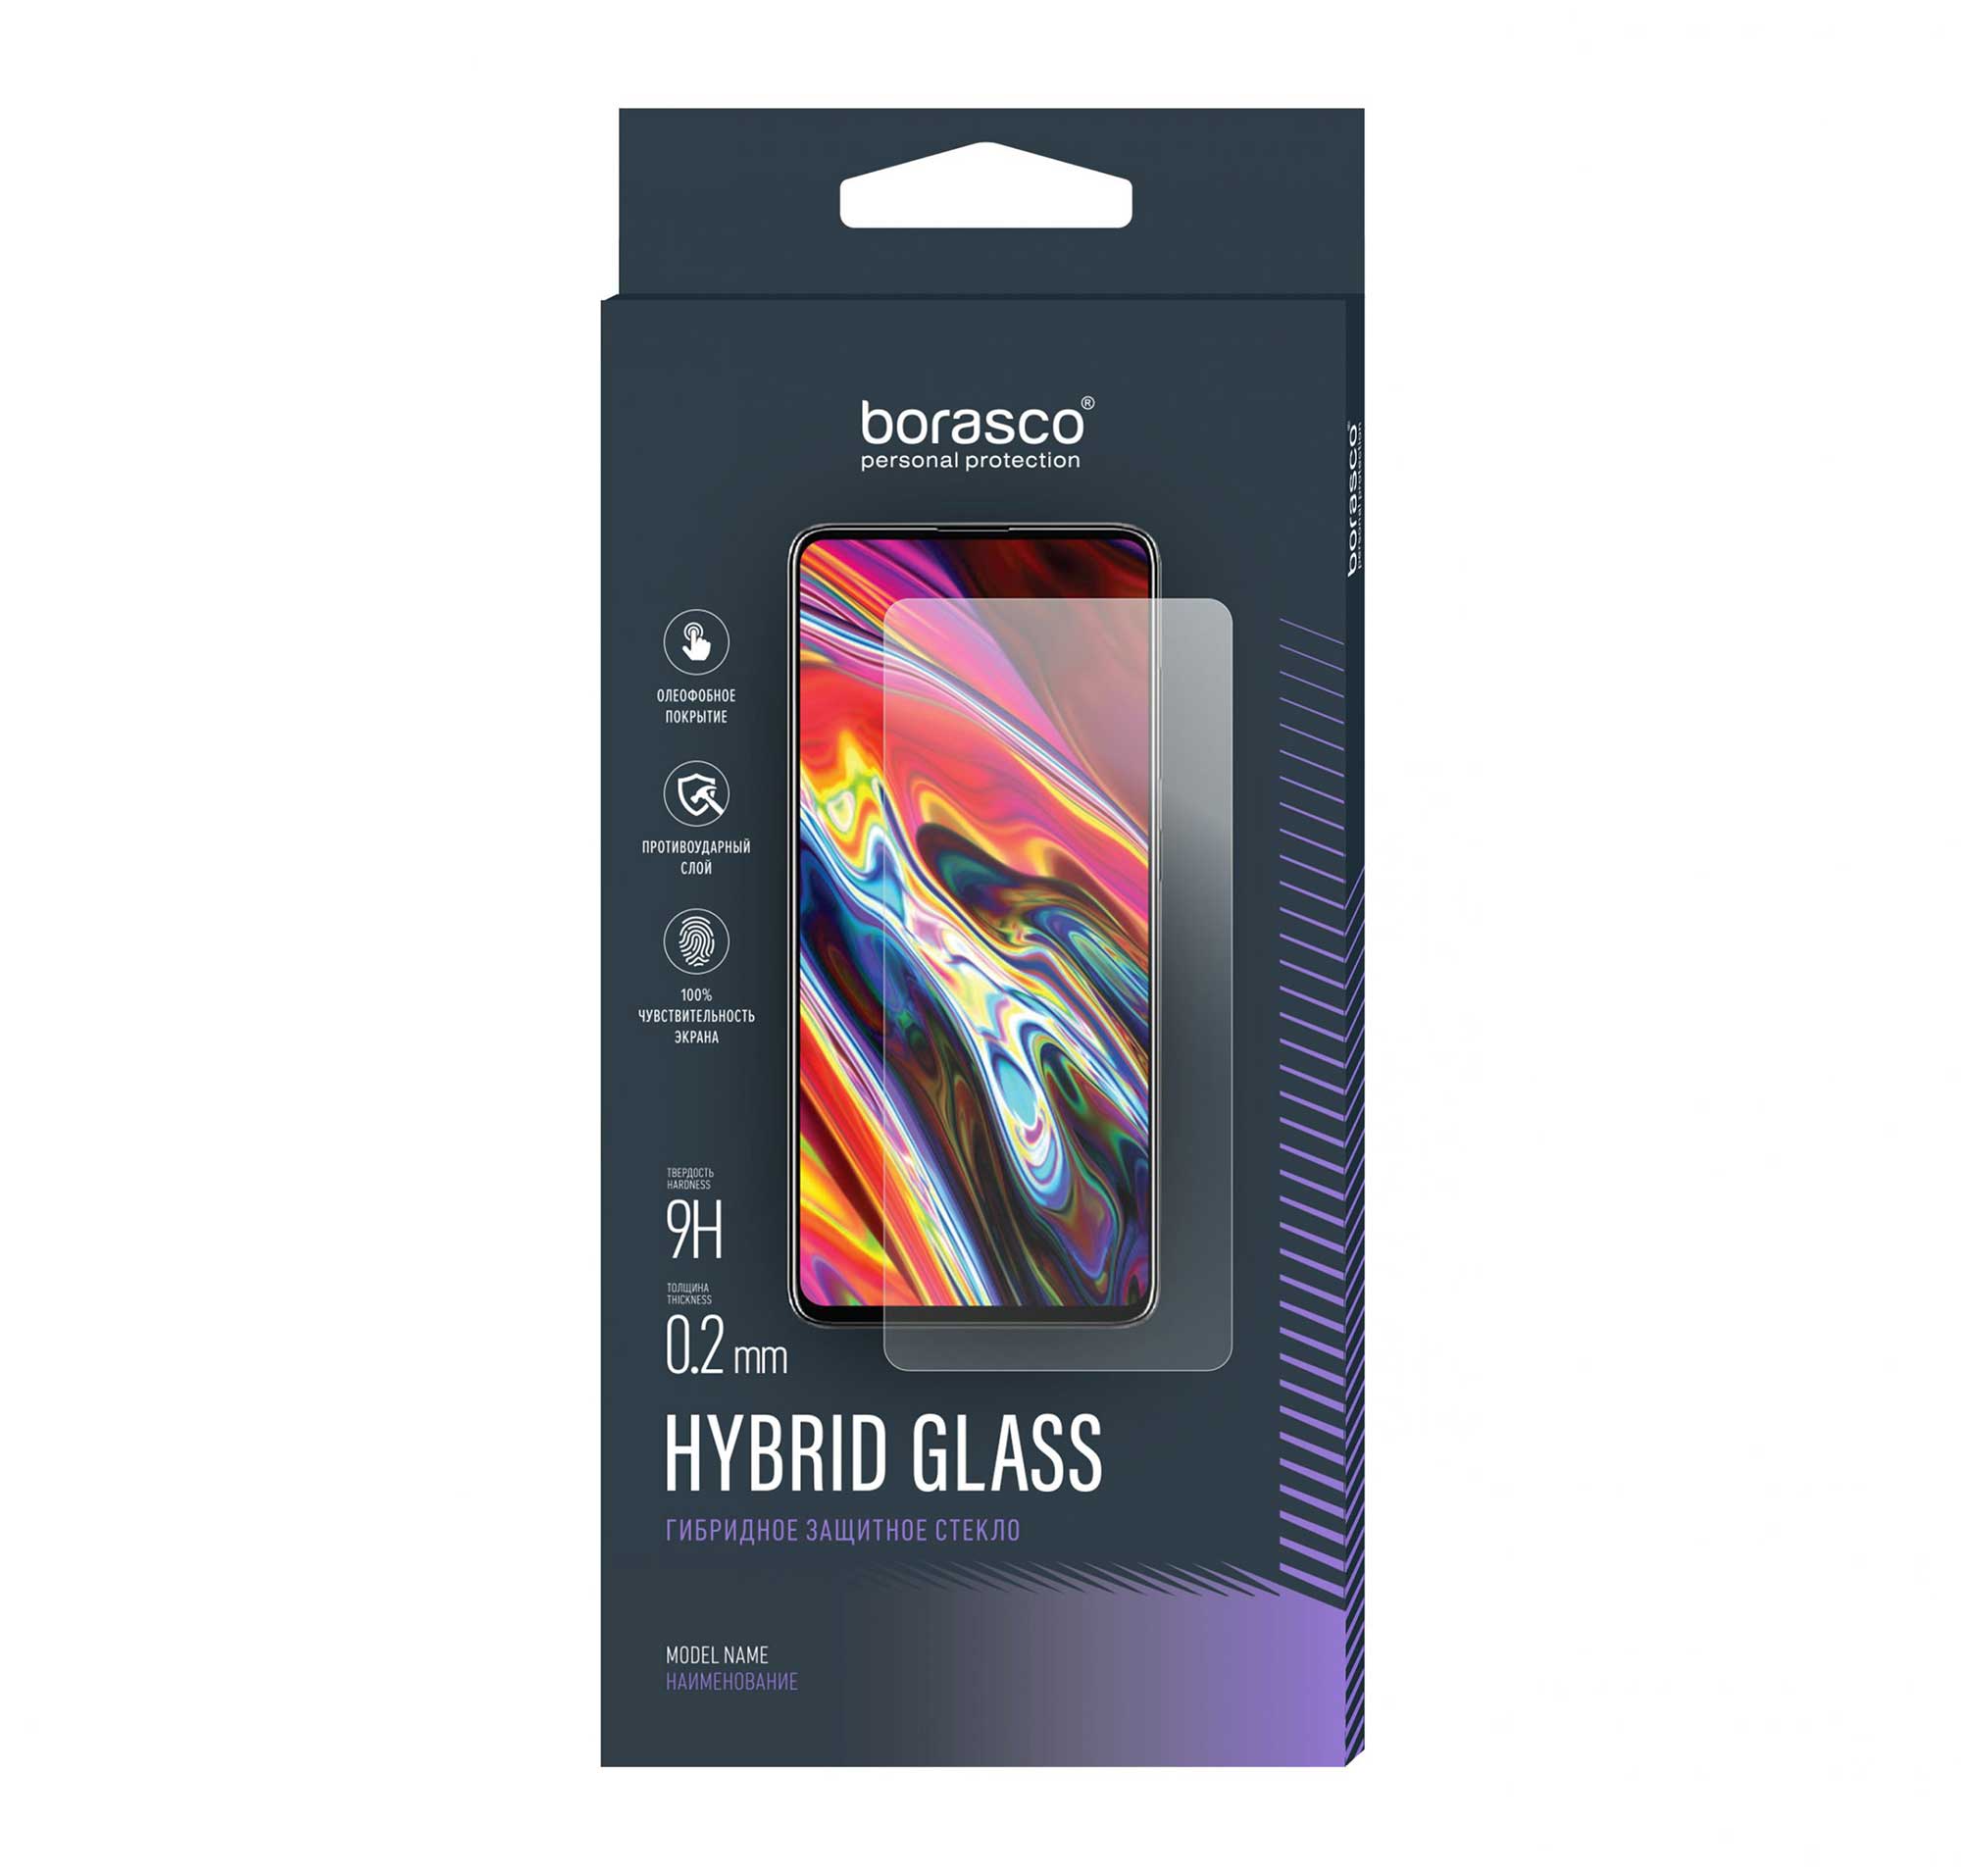 Защитное стекло Hybrid Glass для Itel Vision 1 Pro защитное стекло luxcase для itel vision 1 0 2mm transparent 82675